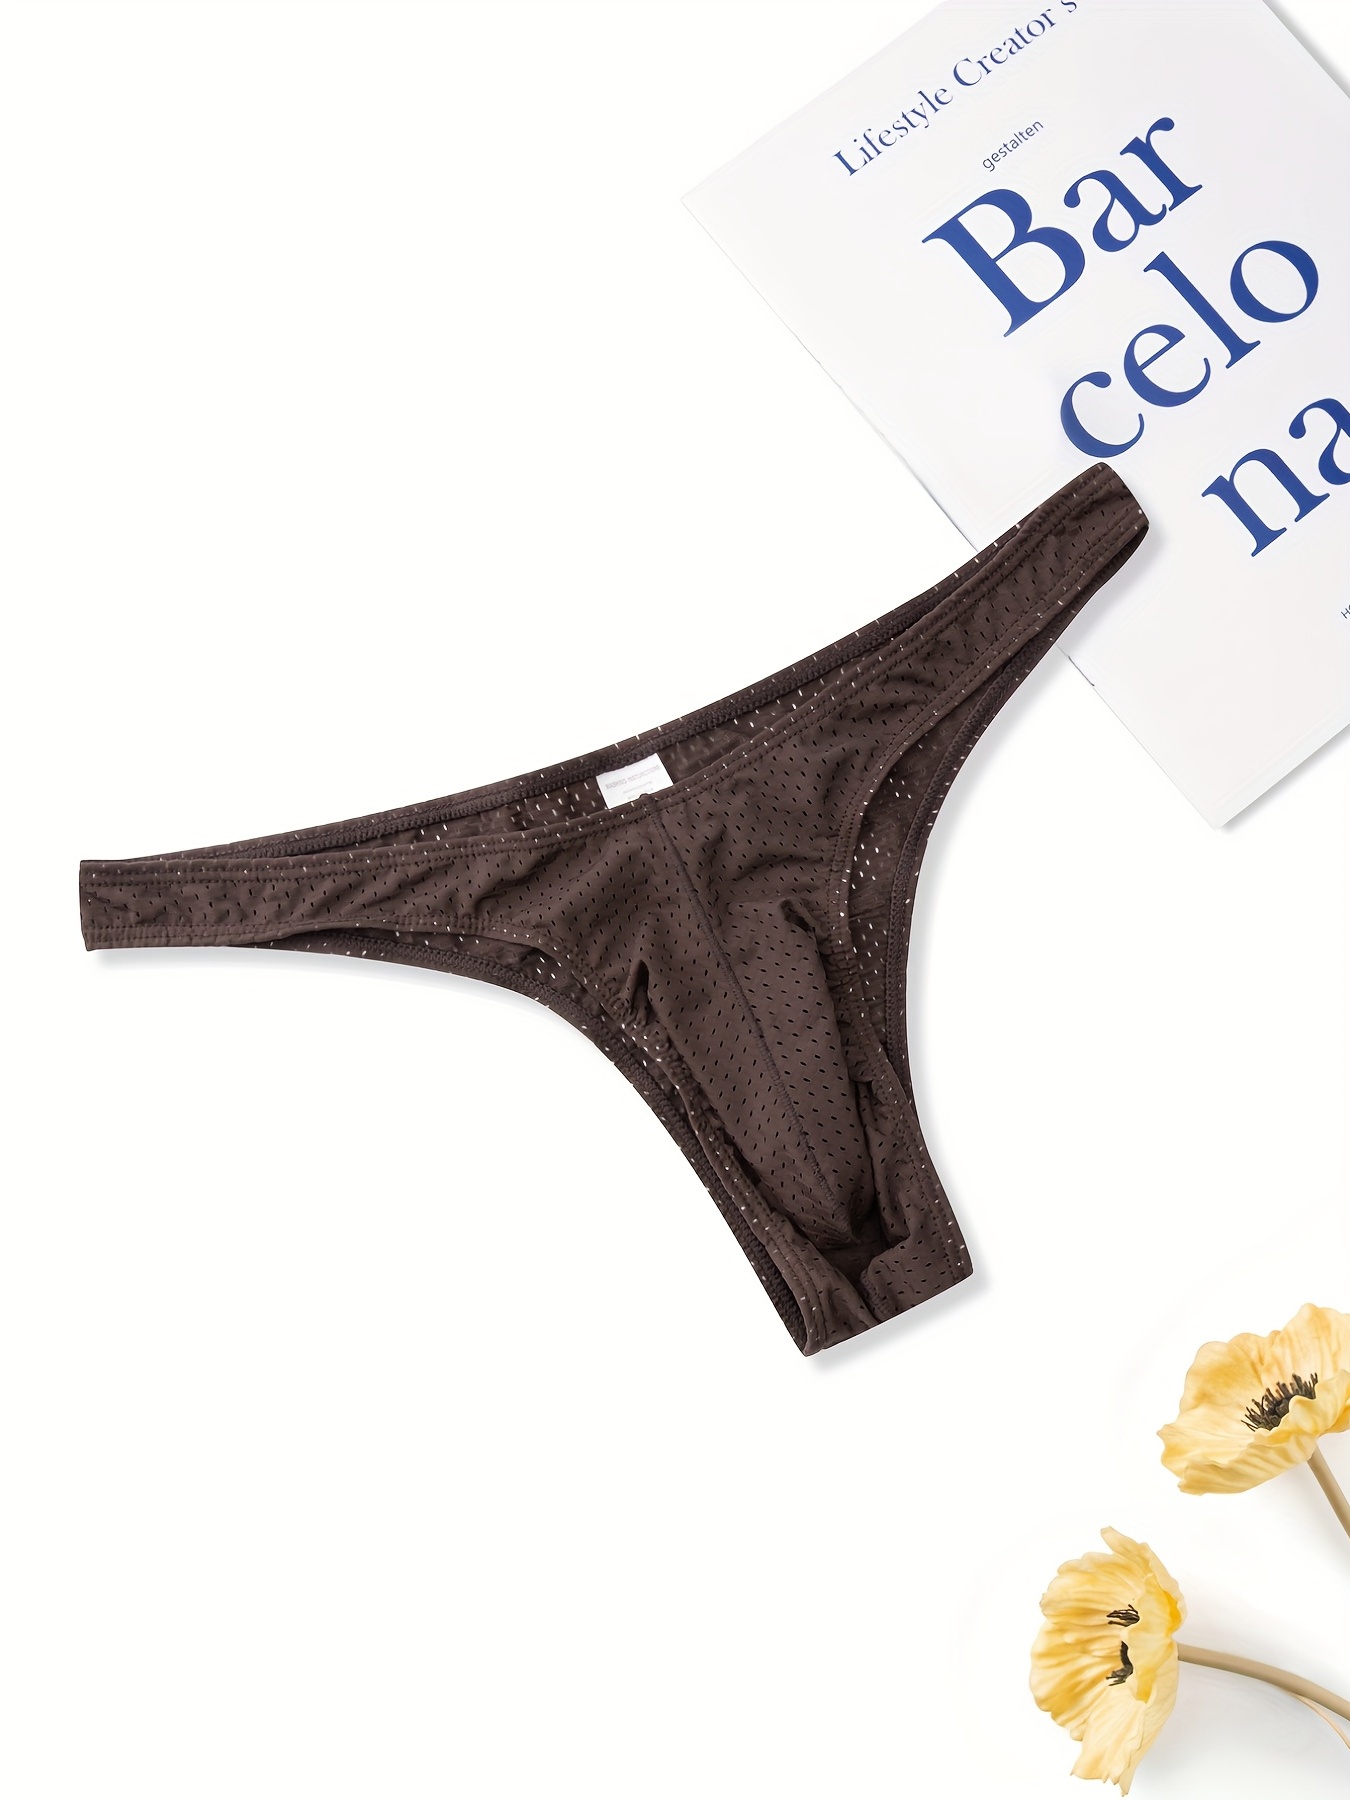 Women Sexy Lingerie G-string Mesh Briefs Underwear Panties T